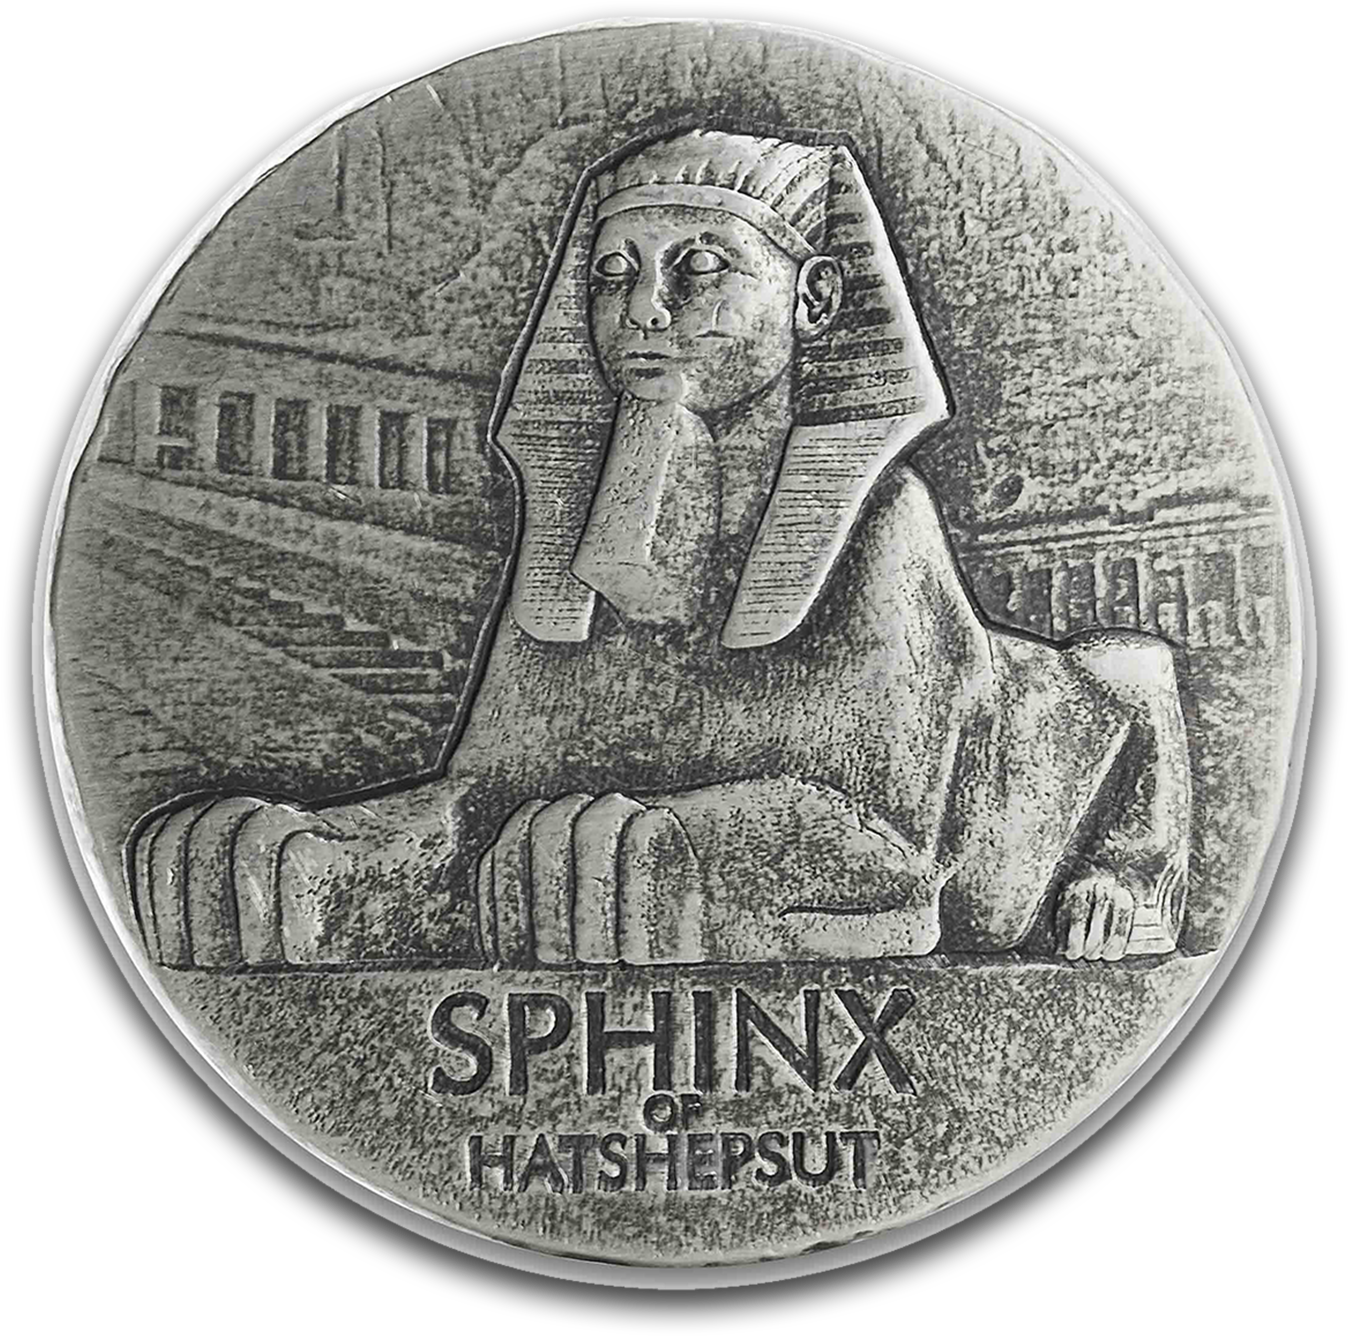 Hatshepsut Sphinx Coin Chad